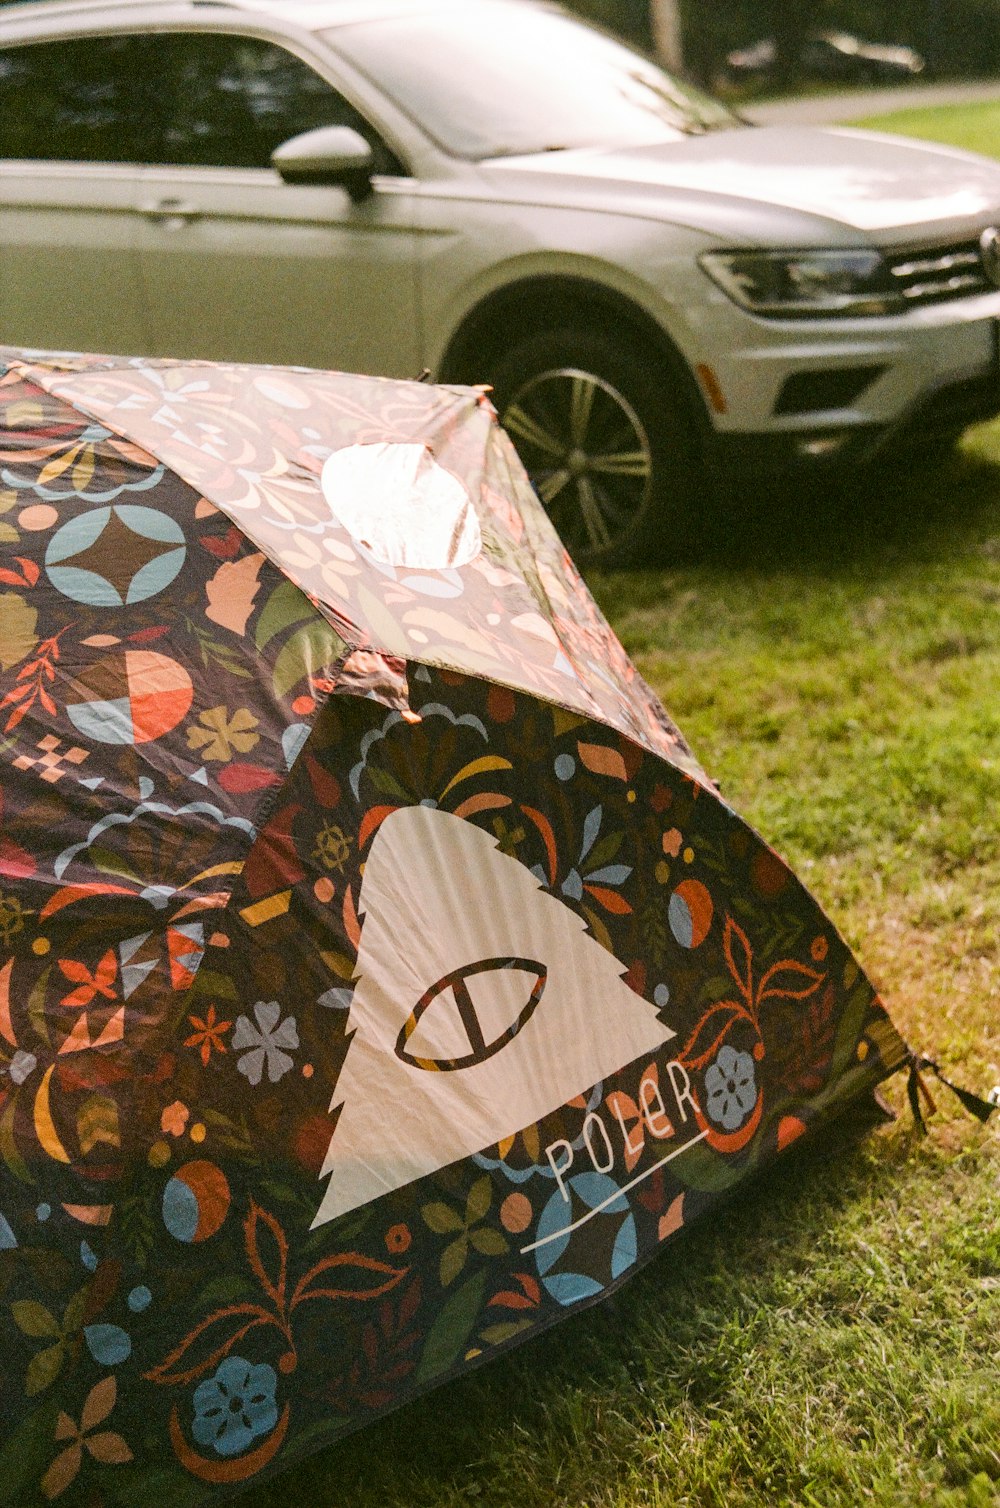 a colorful umbrella on the grass